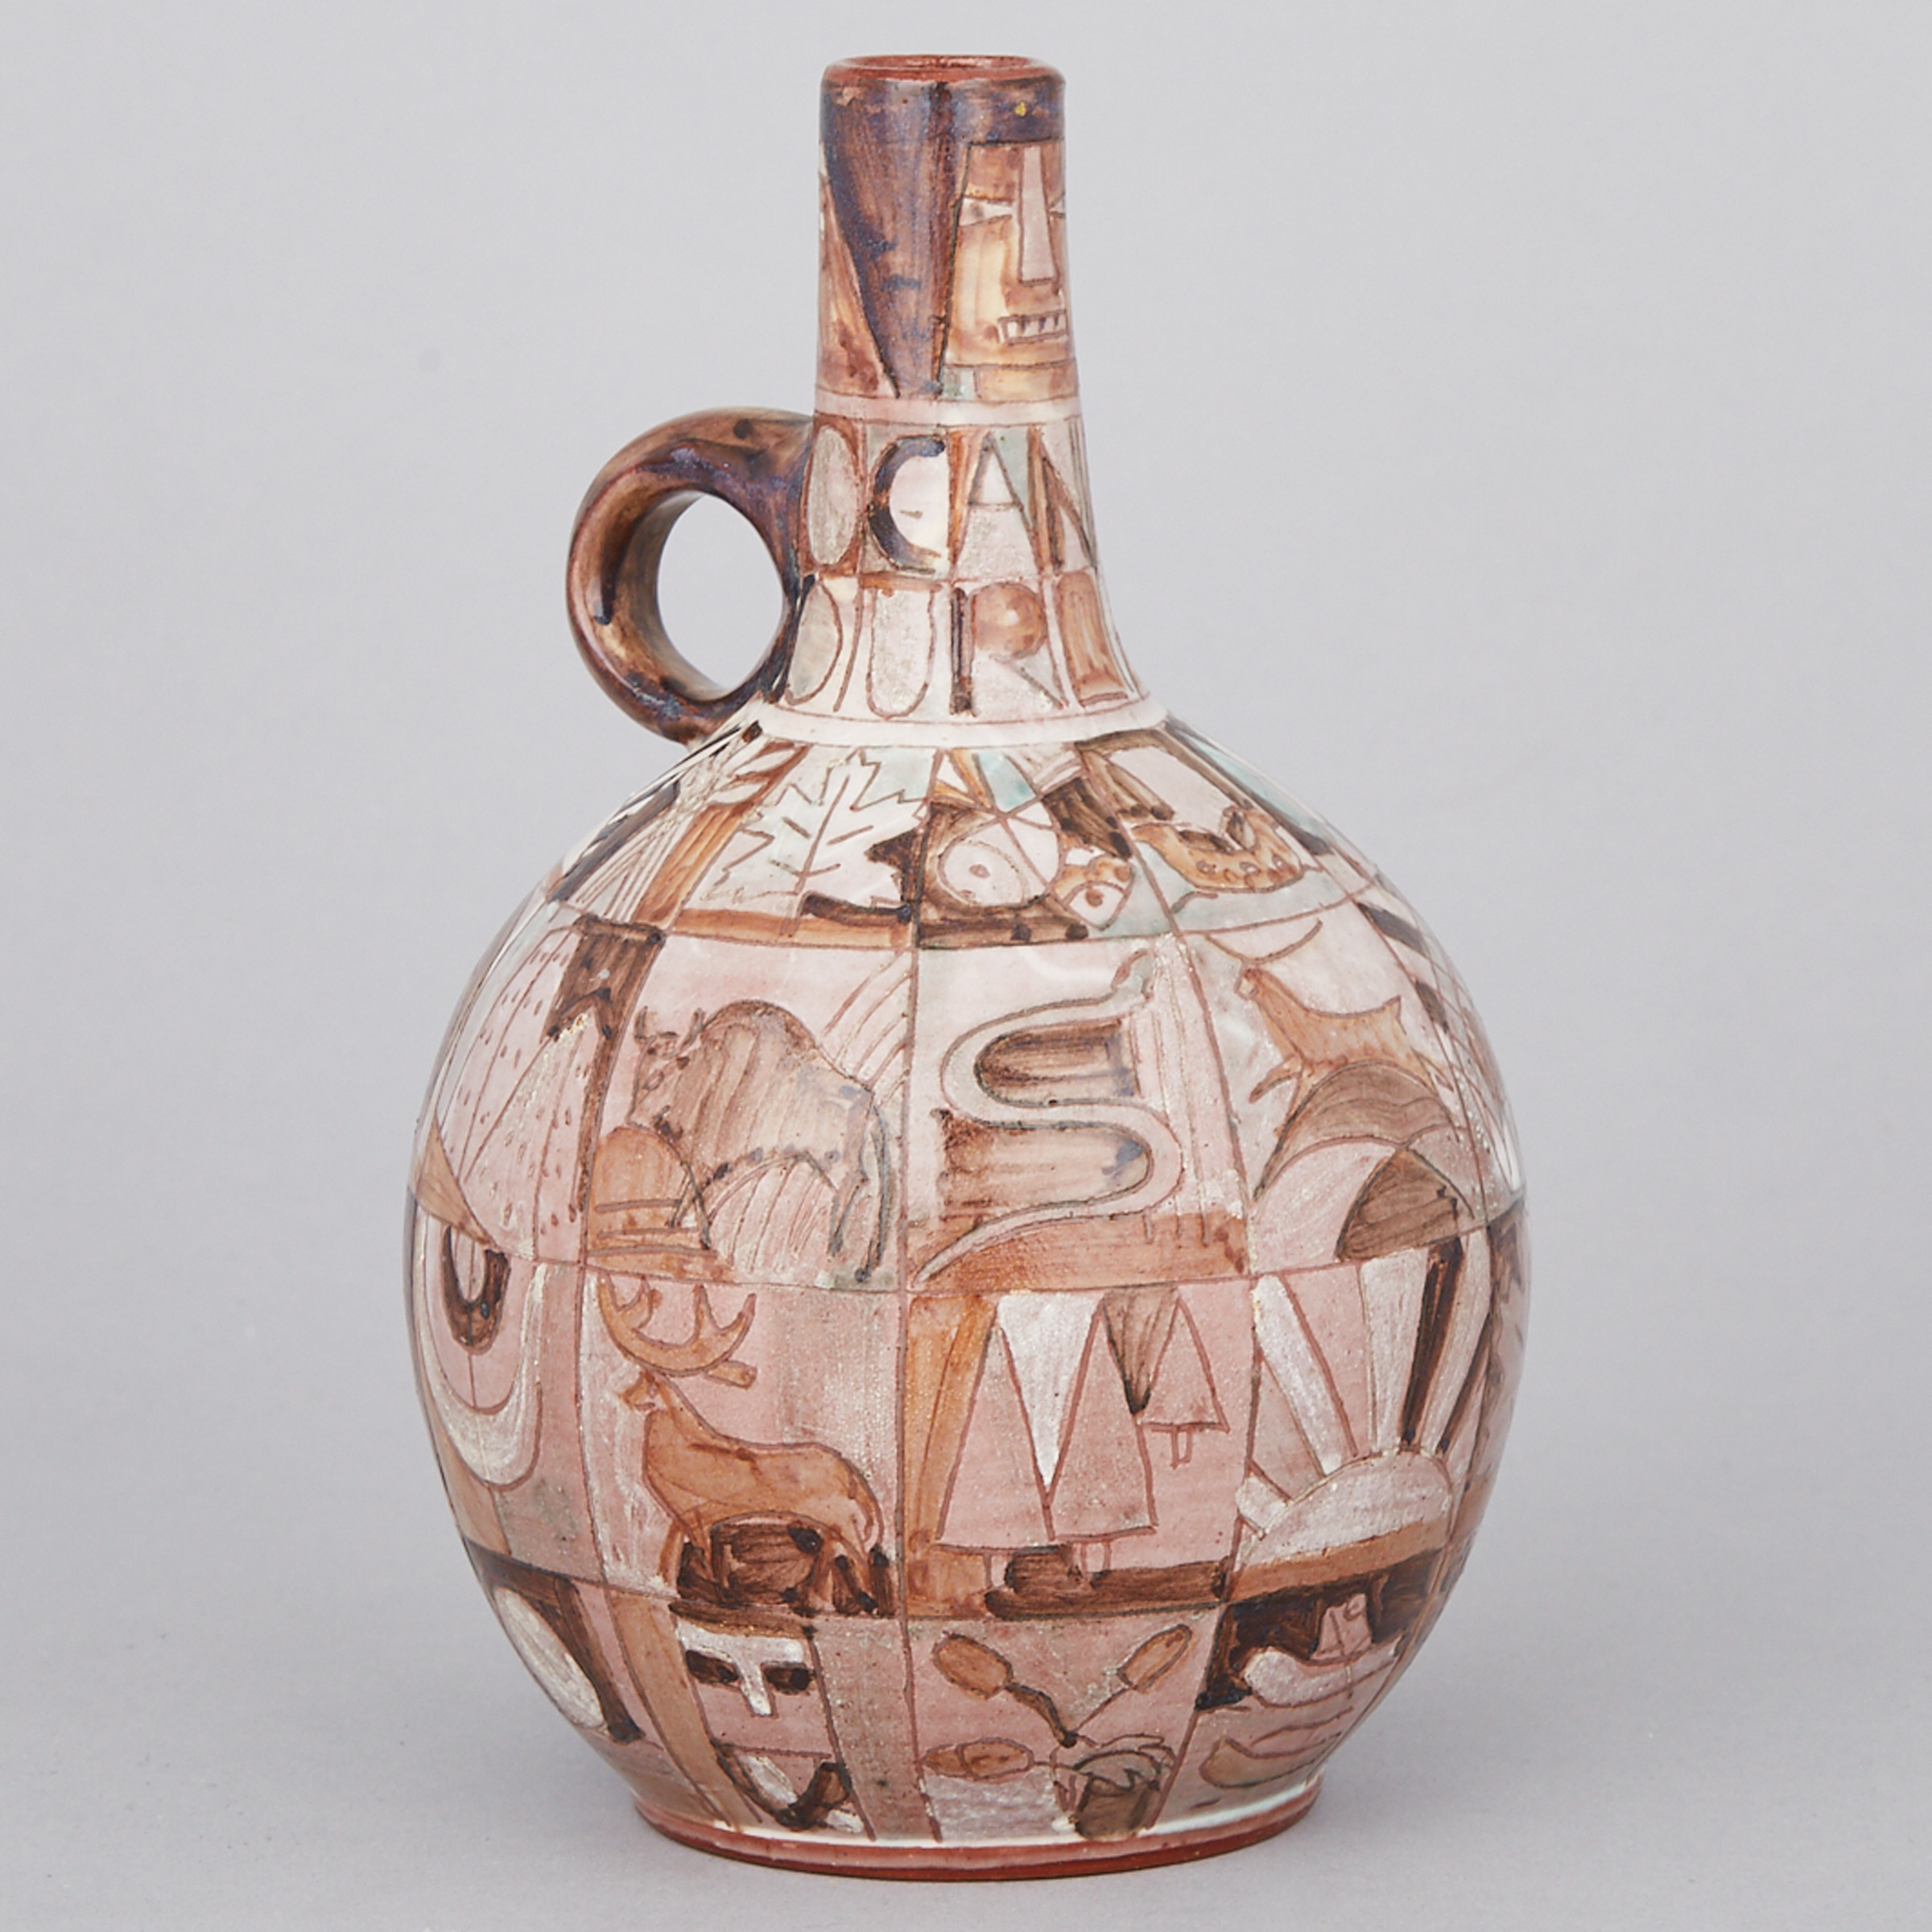 Brooklin Pottery ‘O Canada’ Jug, Theo and Susan Harlander, c.1967